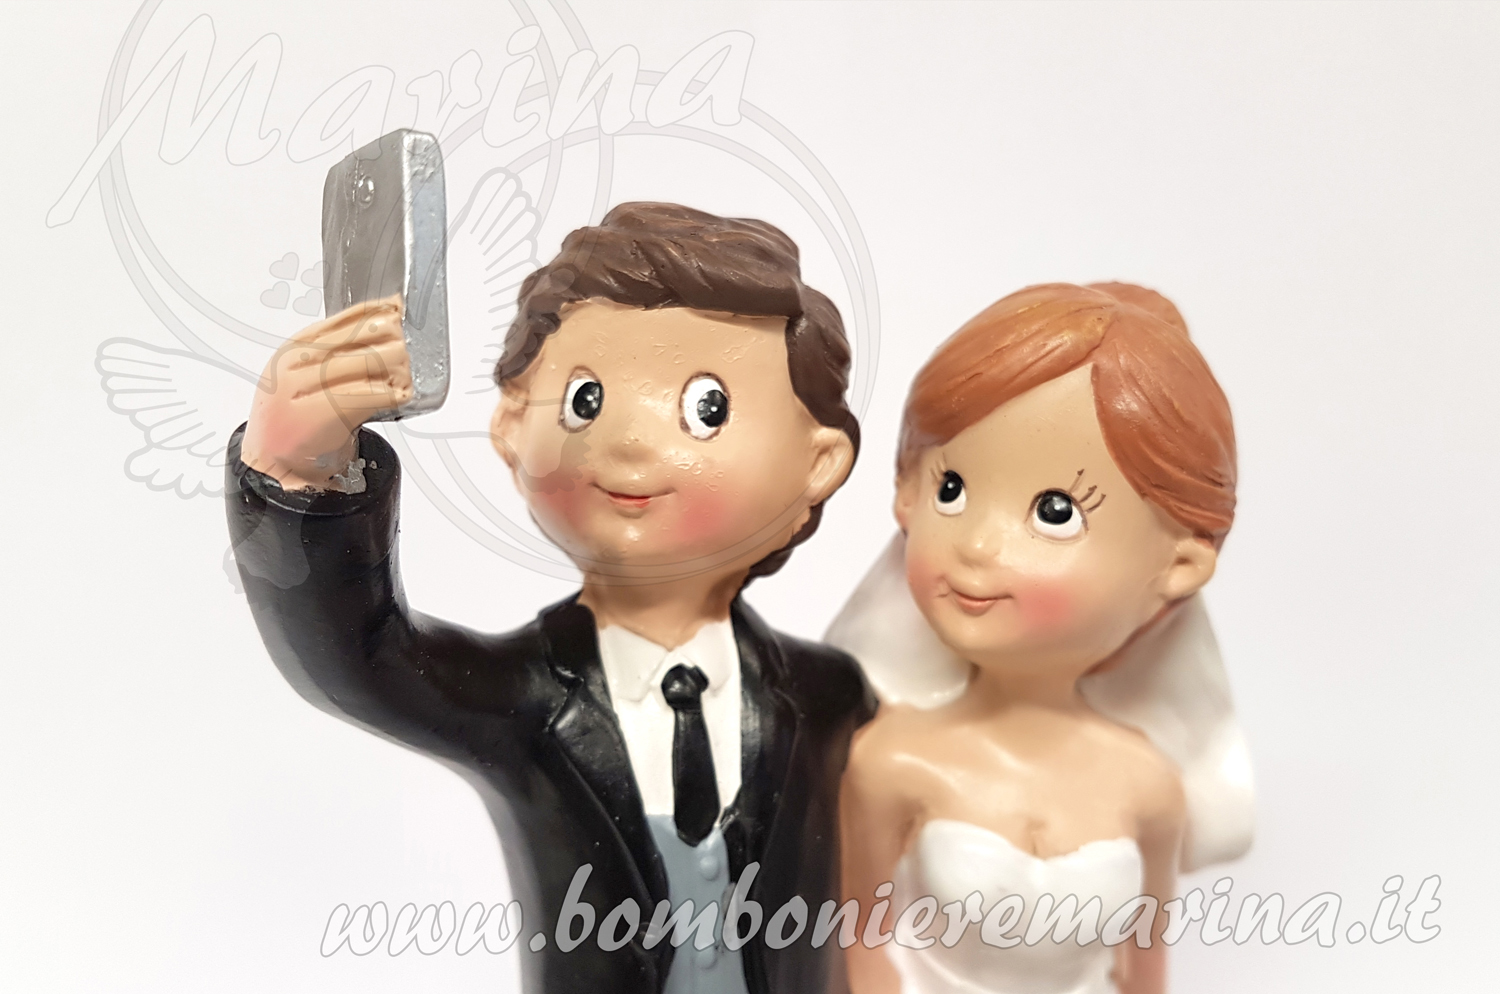 coppia sposi selfie